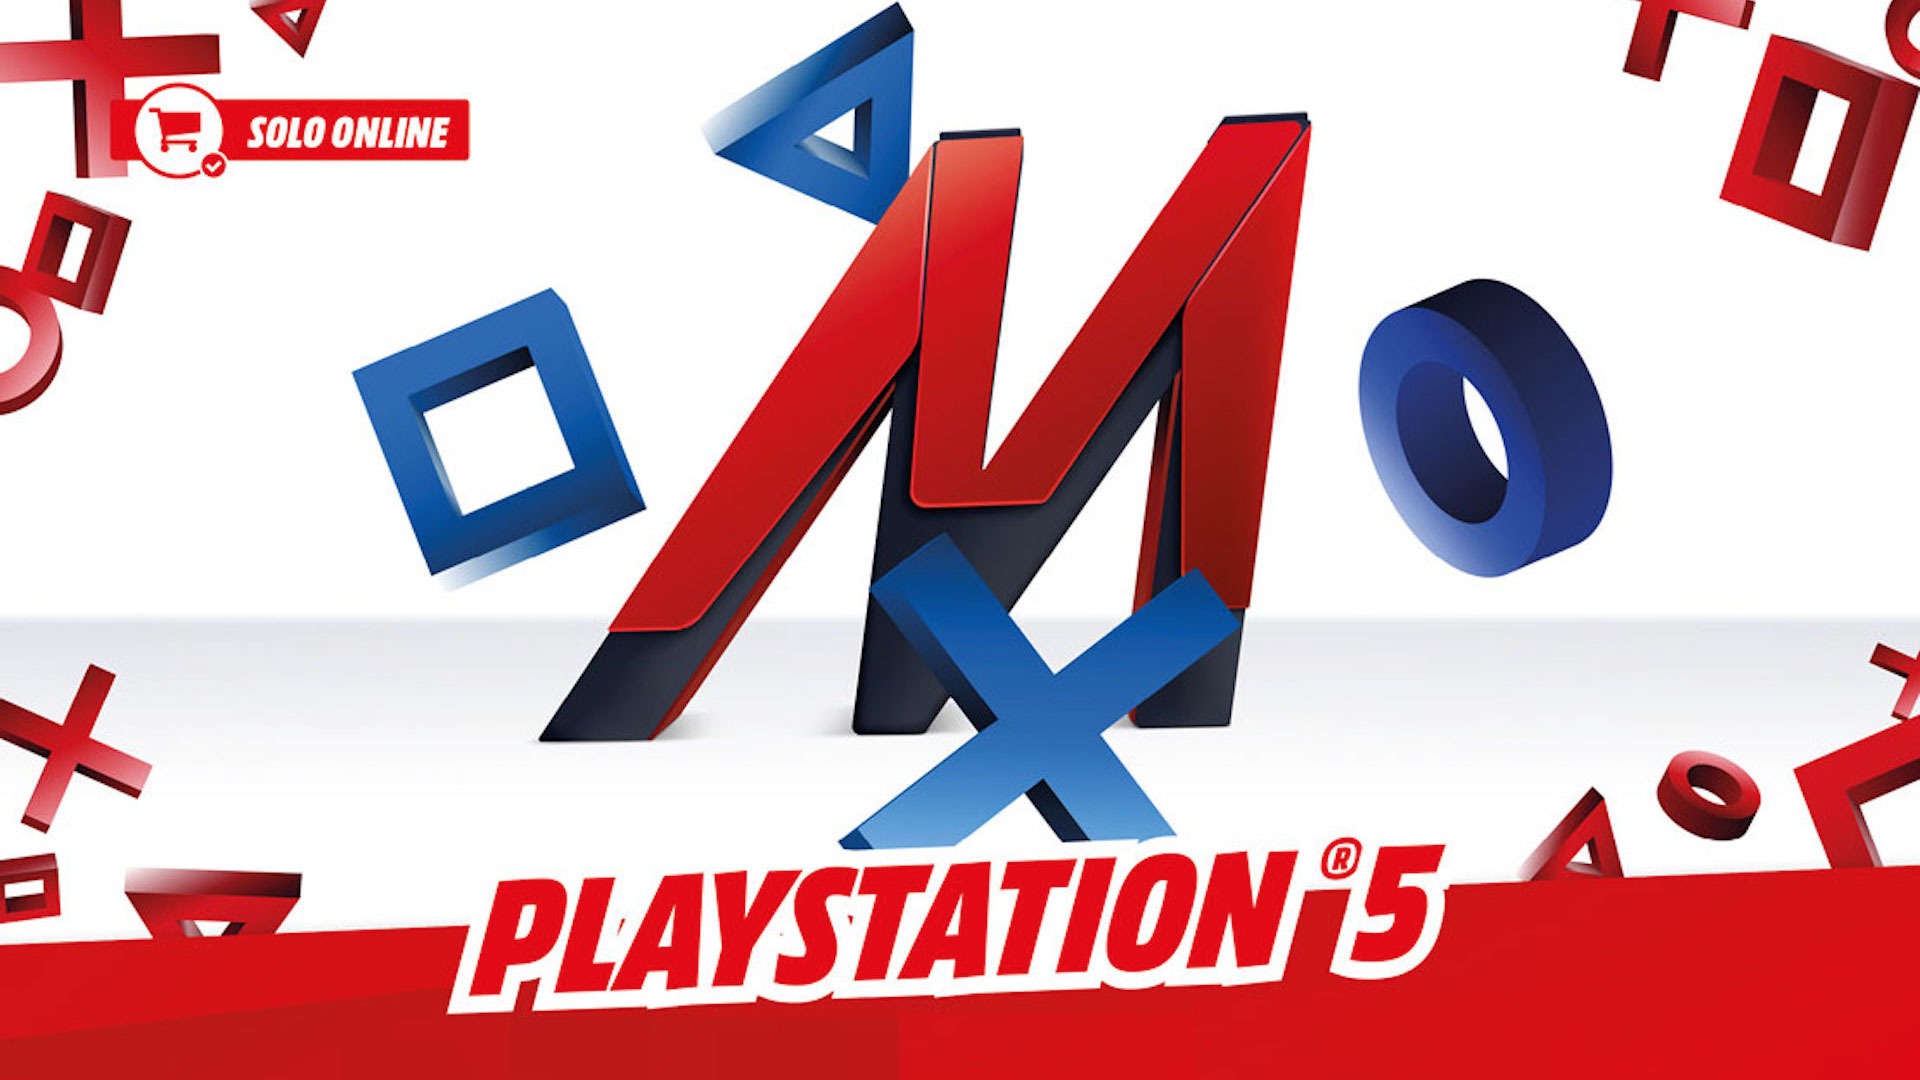 PlayStation 5-MEDIAWORLD